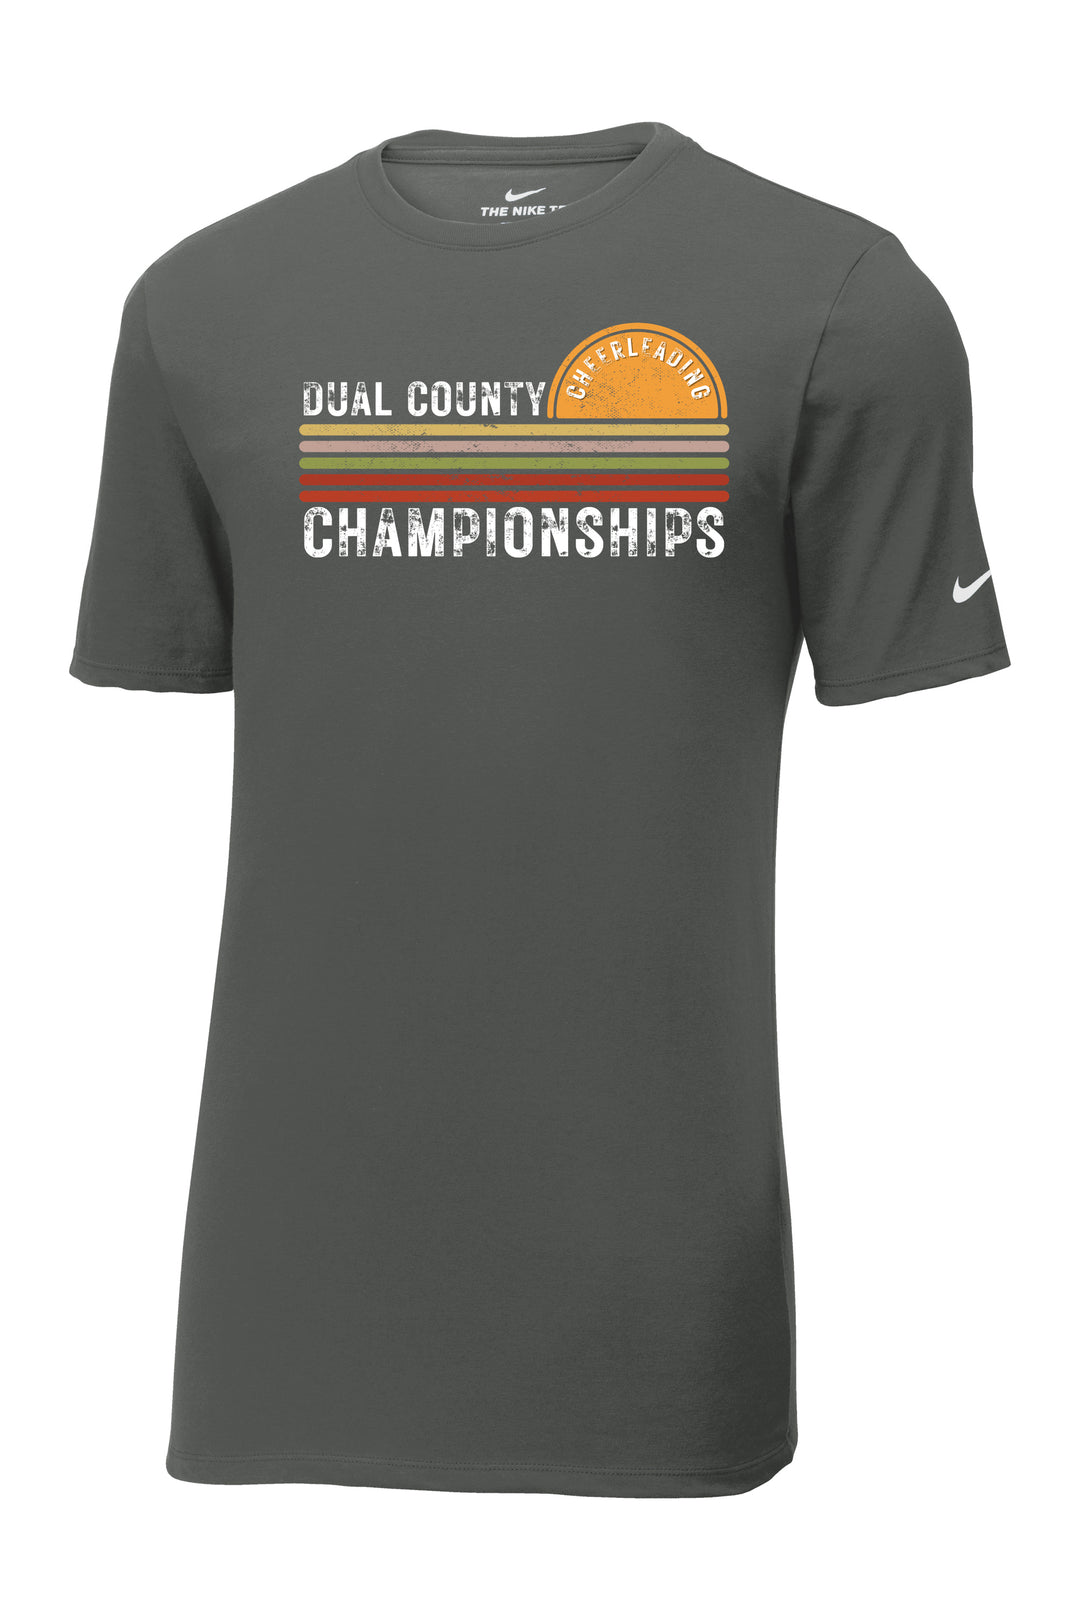 DCL Cheer Championship- Nike Dri FIT Cotton/Poly Tee (NKBQ5231)